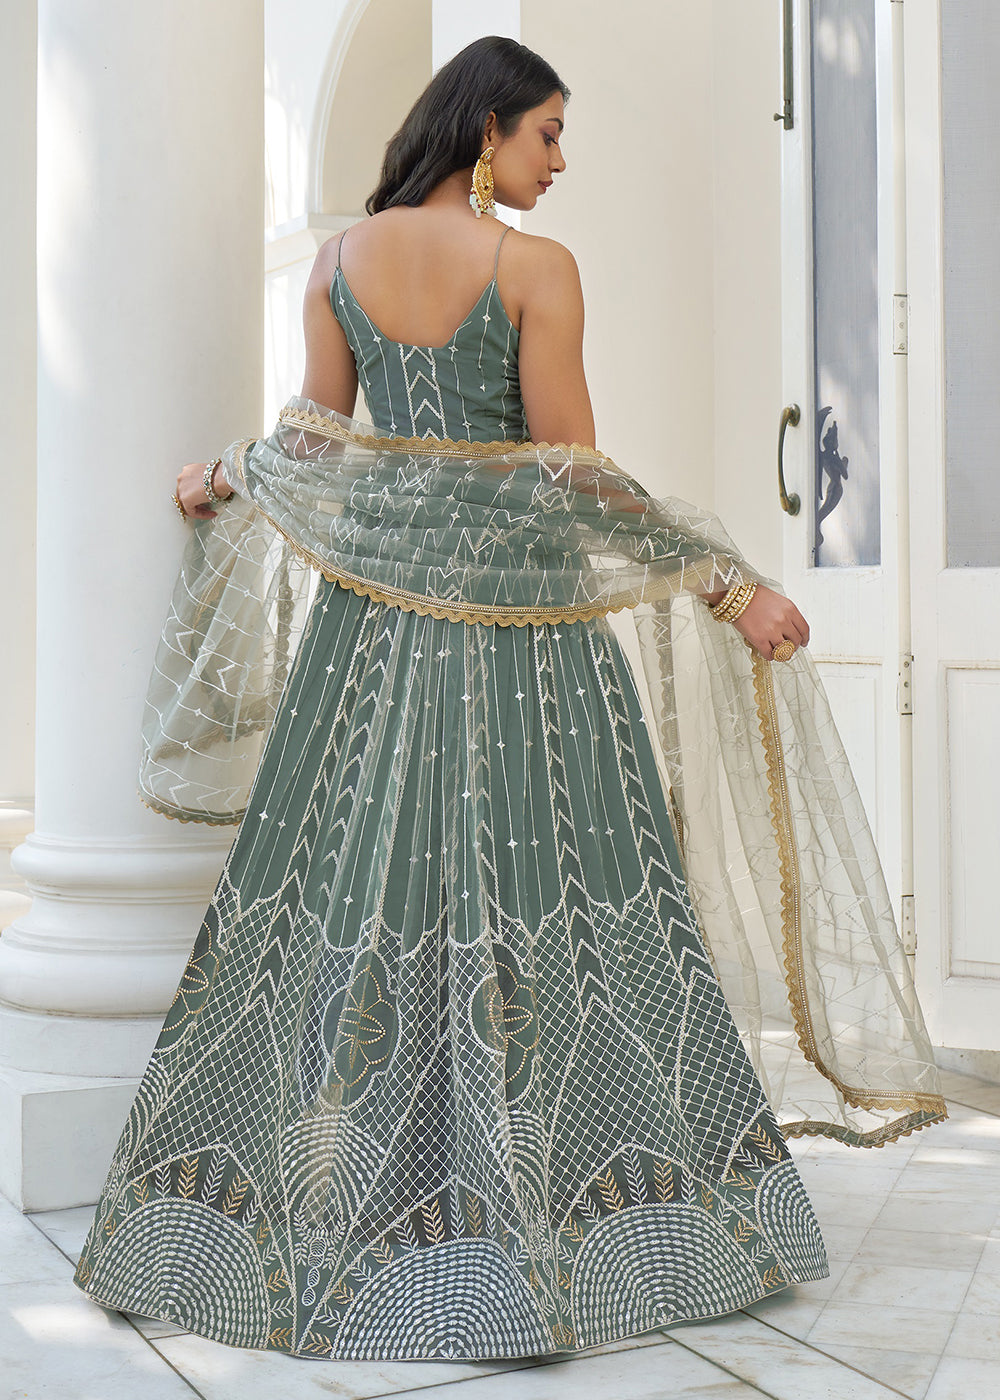 Buy Now Dusty Green Net Embroidered Wedding Lehenga Choli Online in USA, UK, Canada & Worldwide at Empress Clothing. 